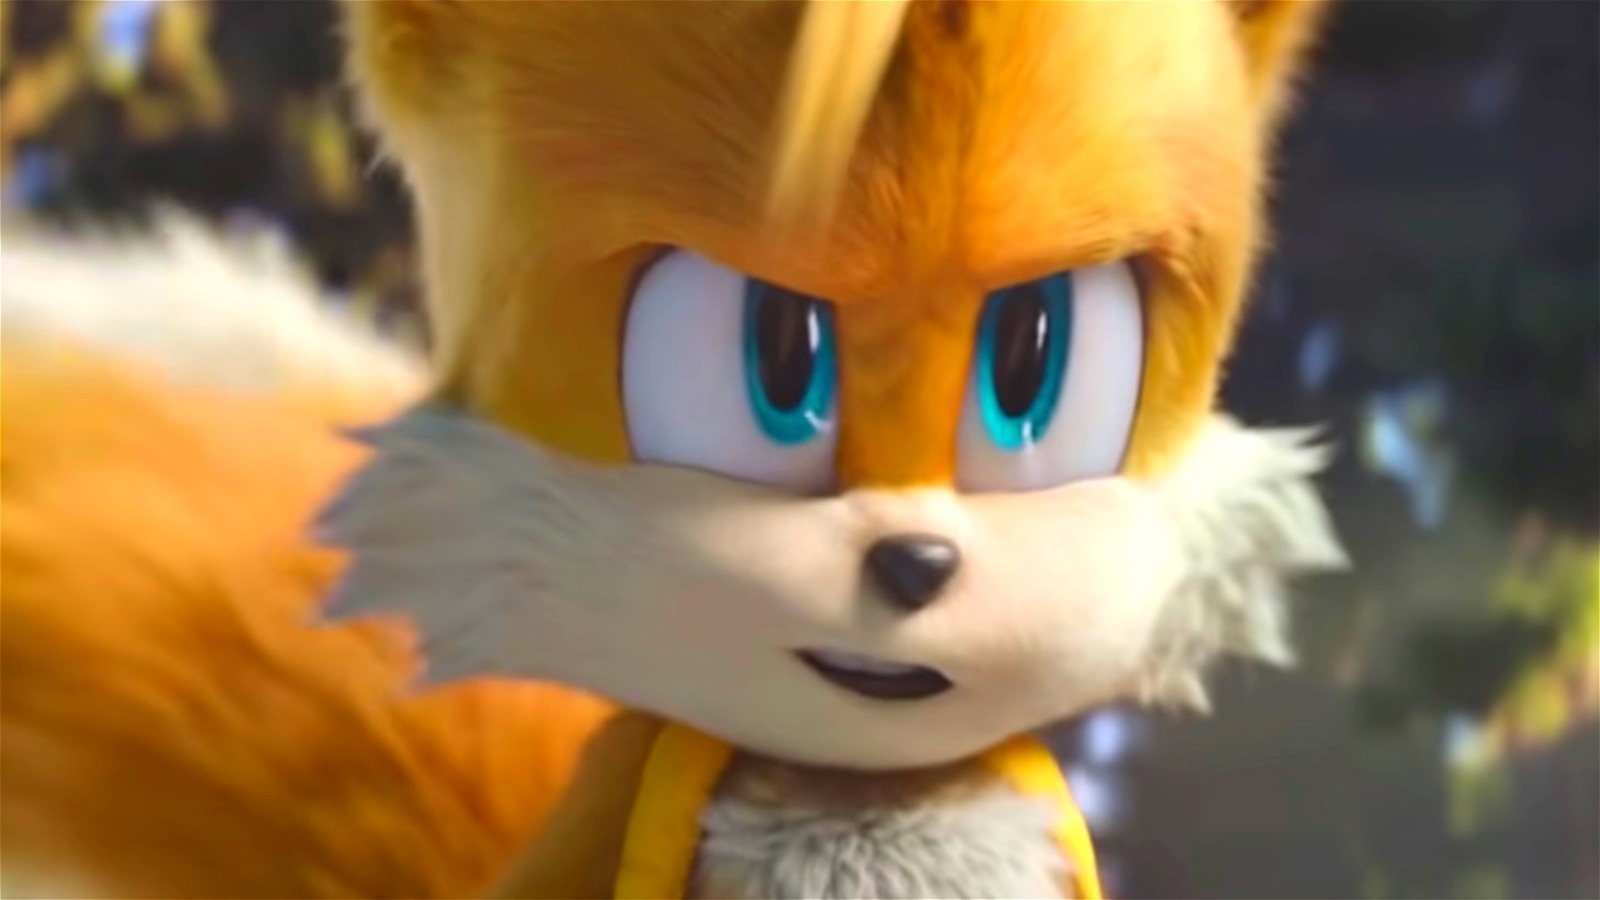 Sonic the Hedgehog 2 (2022) - Video Gallery - IMDb